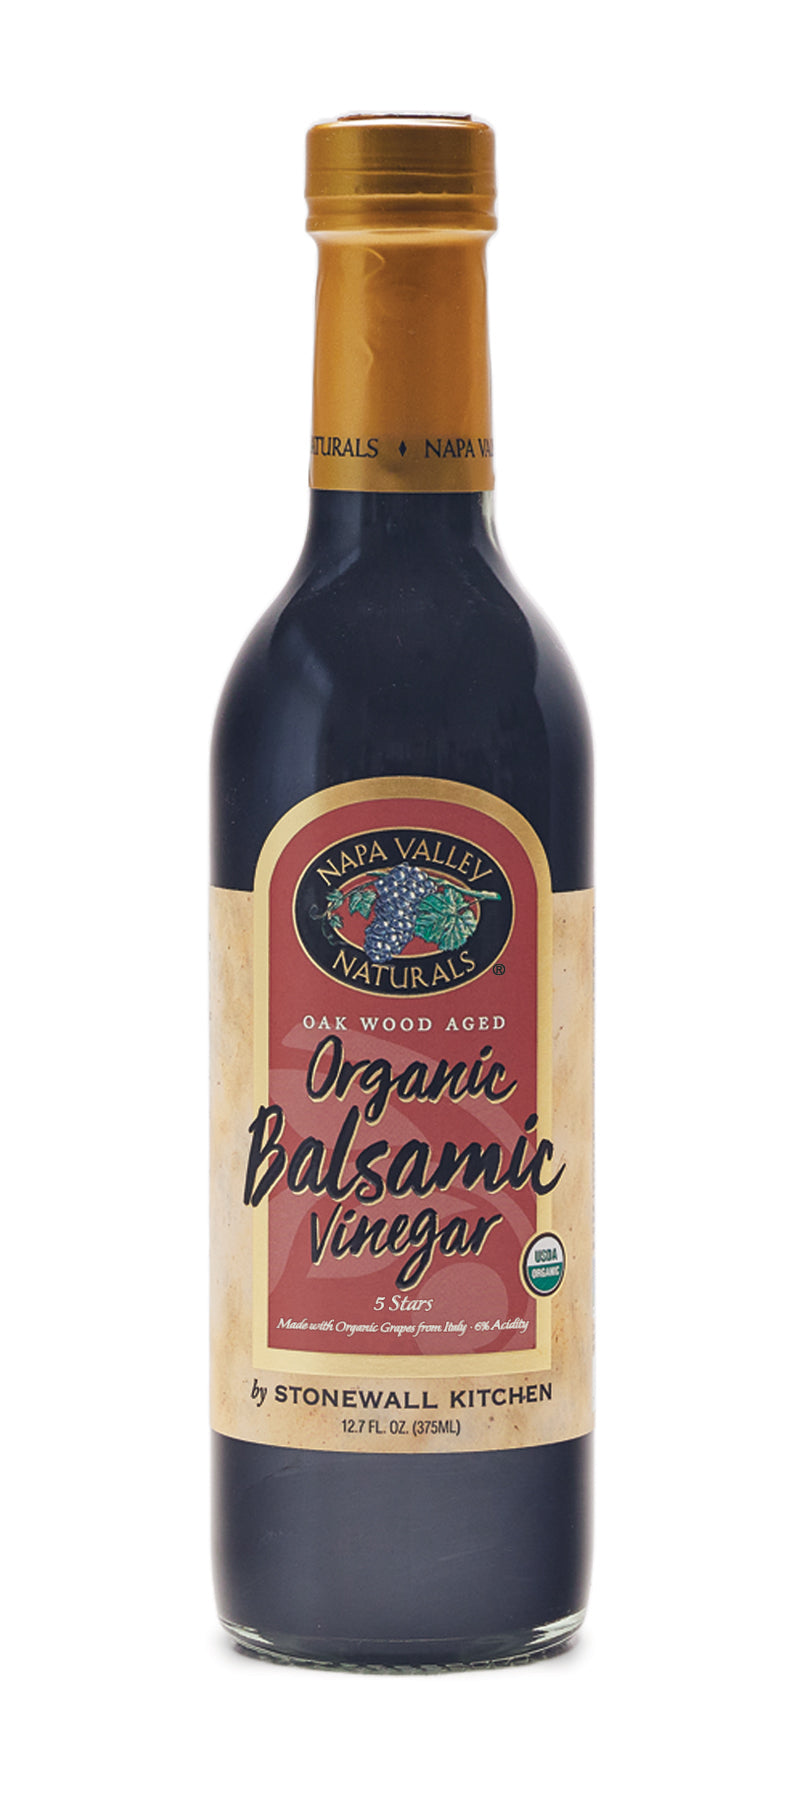 Napa Valley Naturals Organic Balsamic Vinegar - Olive Oil Etcetera 